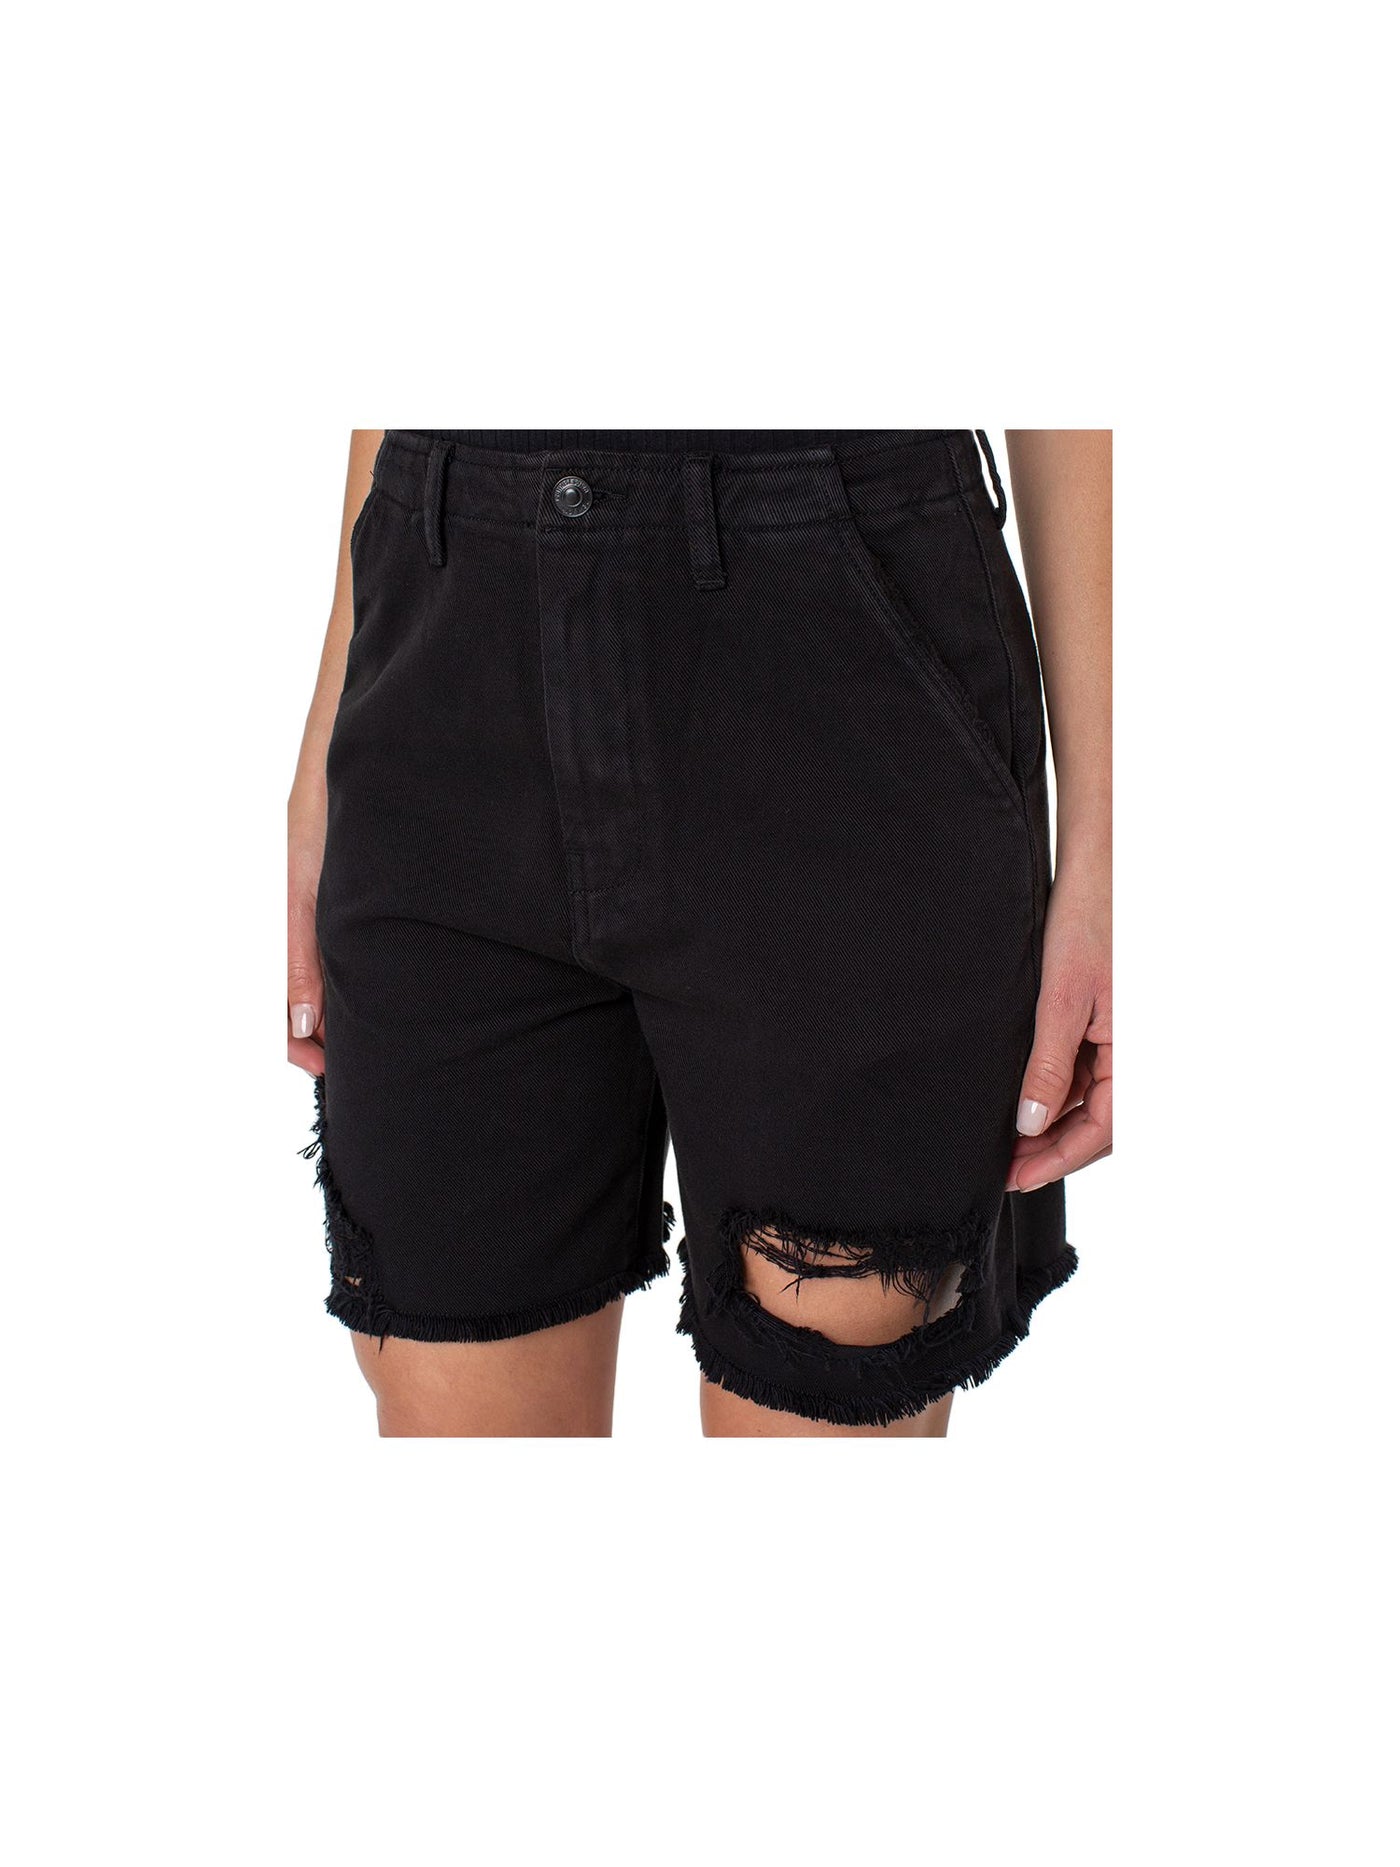 EARNEST SEWN NEW YORK Womens Black Denim Zippered Pocketed Frayed Hems High Waist Shorts 26